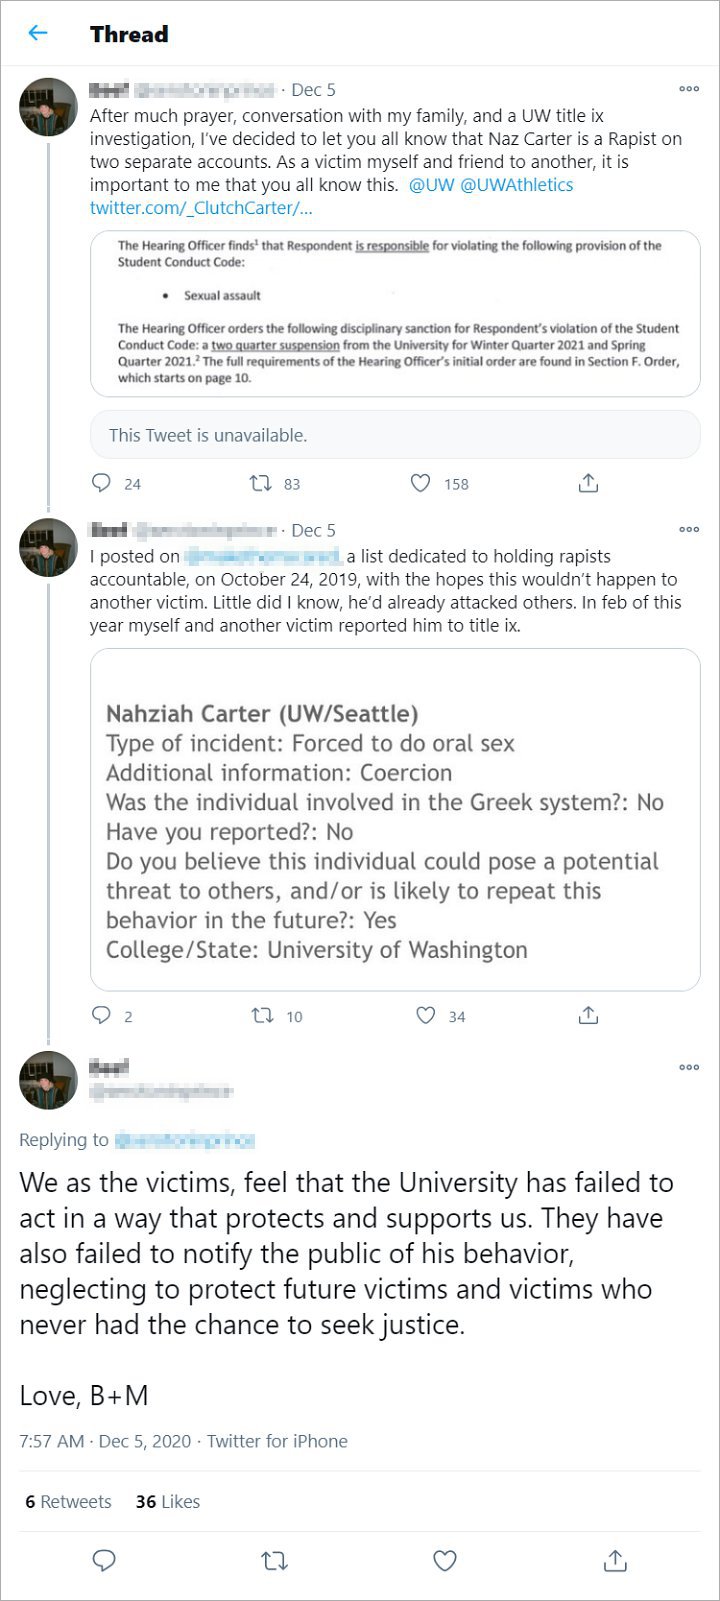 Tweets by Nahziah Carter's Alleged Victim